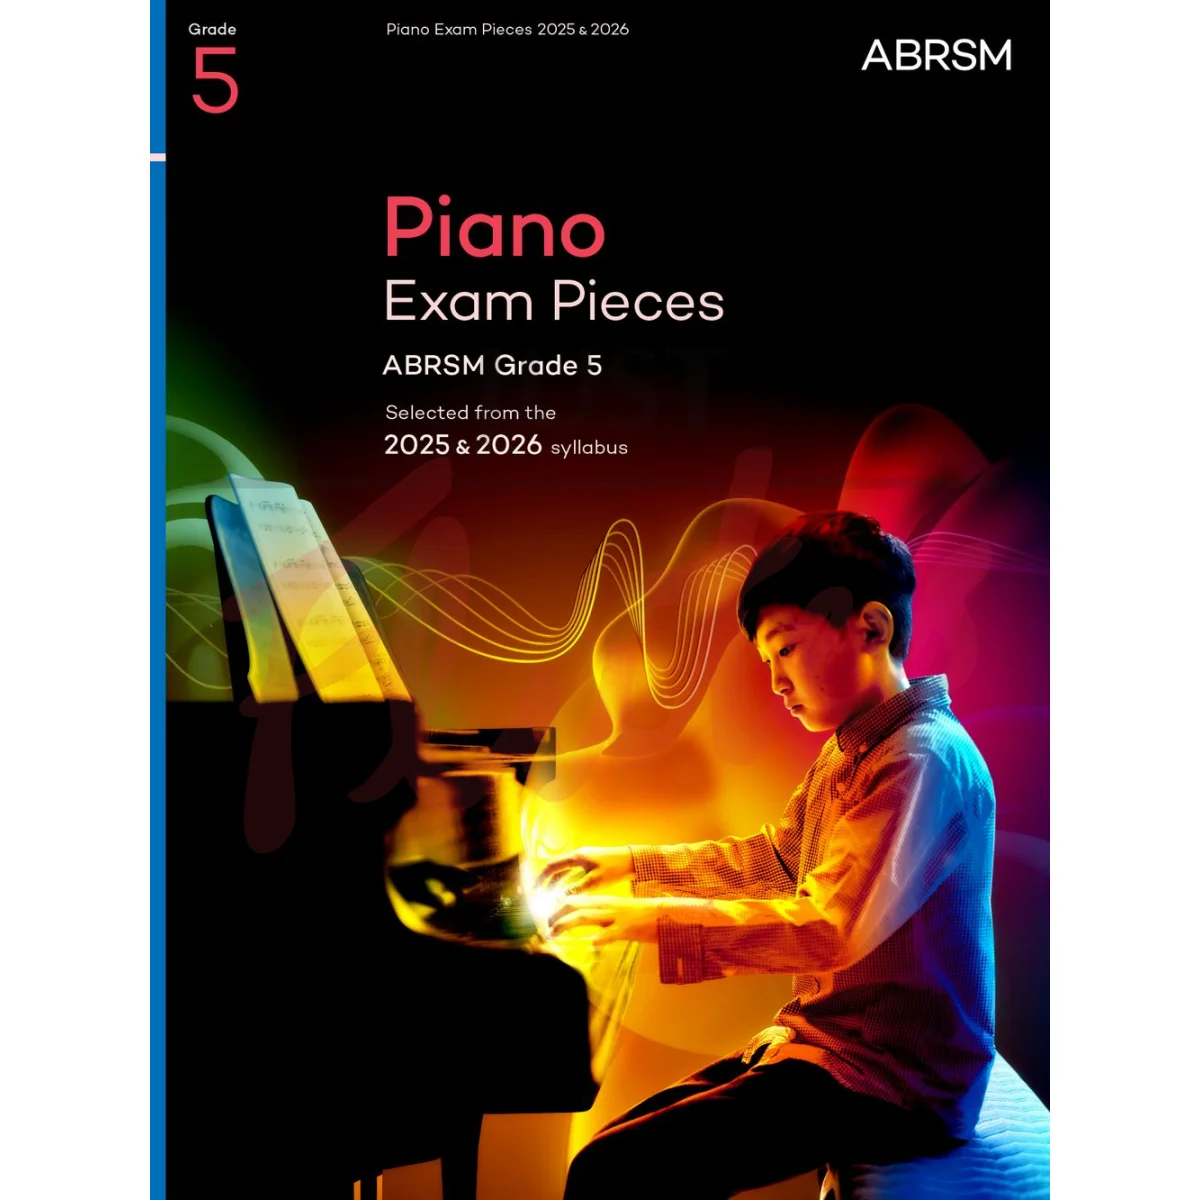 Piano Exam Pieces 2025-26, Grade 5